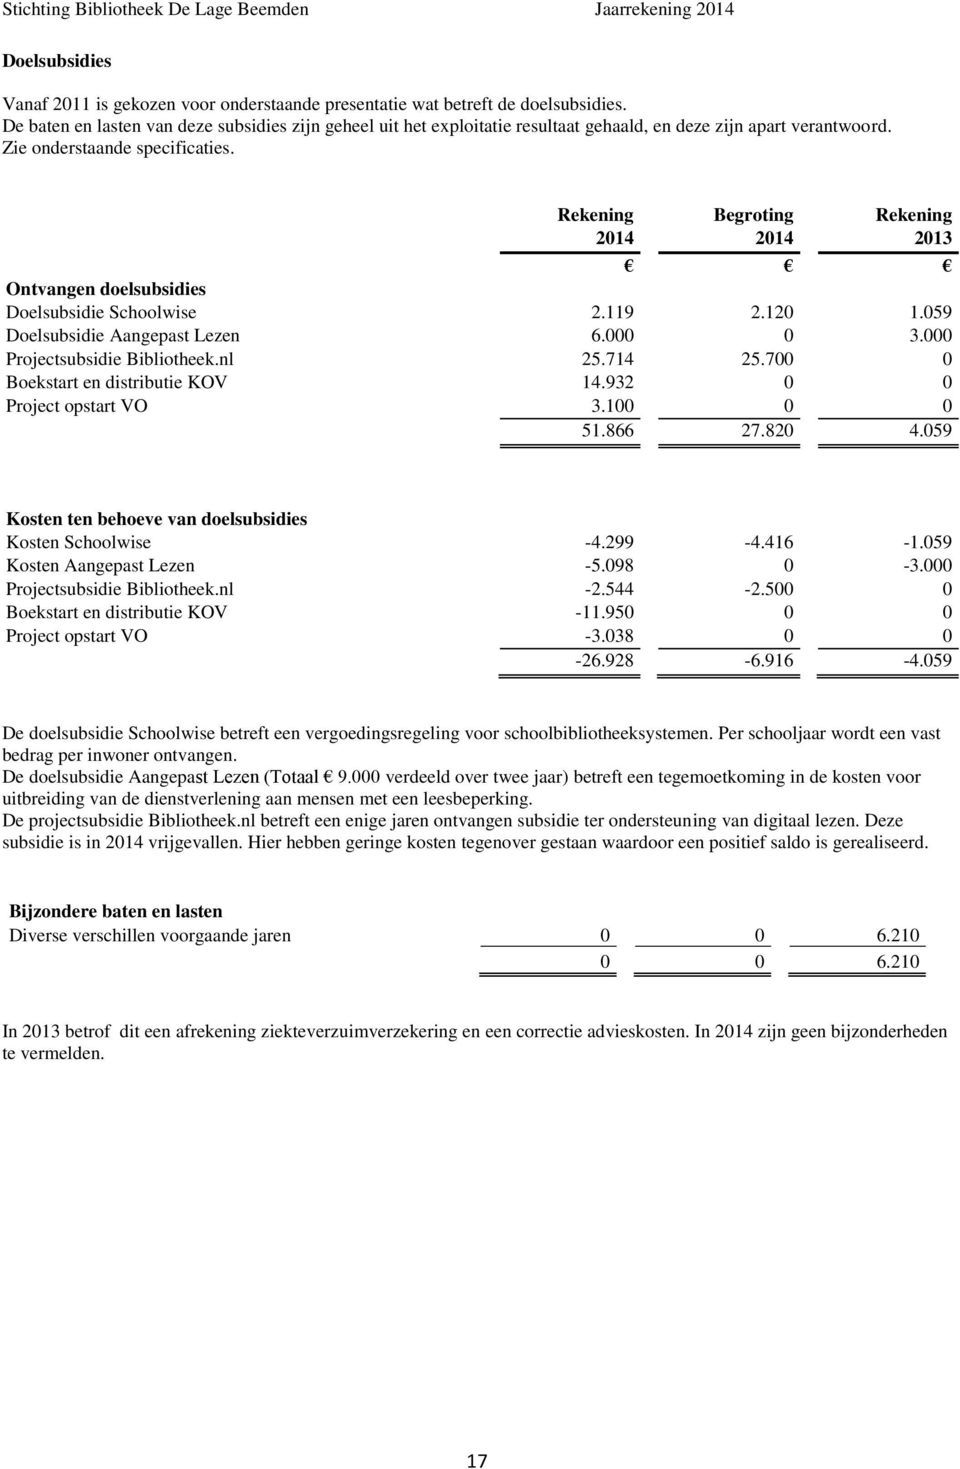 Rekening Begroting Rekening 2014 2014 2013 Ontvangen doelsubsidies Doelsubsidie Schoolwise 2.119 2.120 1.059 Doelsubsidie Aangepast Lezen 6.000 0 3.000 Projectsubsidie Bibliotheek.nl 25.714 25.